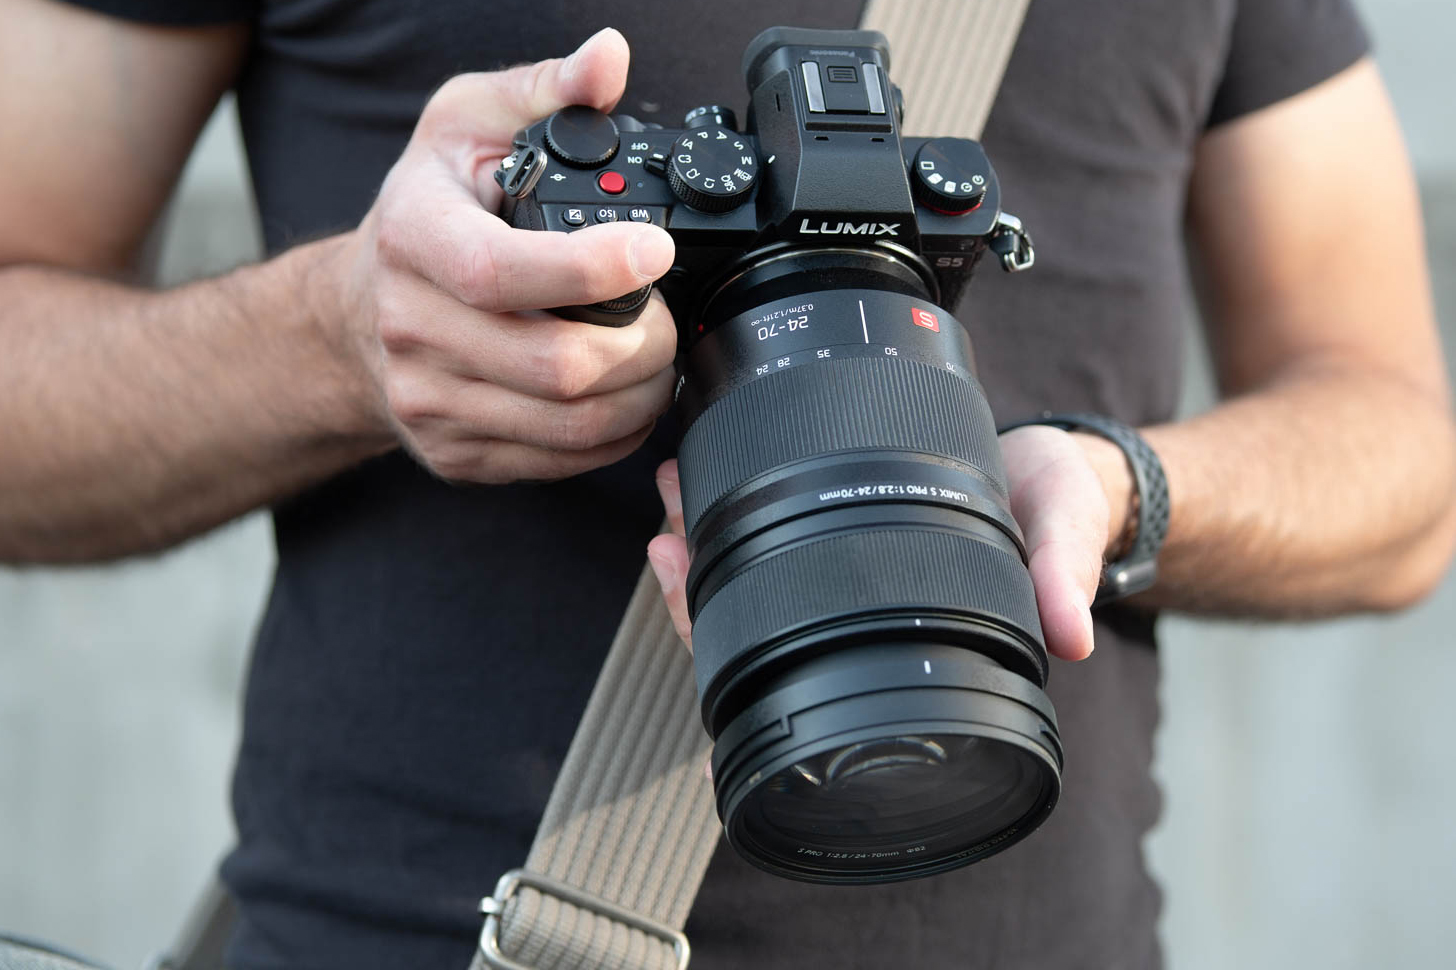 Panasonic LUMIX S5 4K Mirrorless Full-Frame L-Mount Camera Body w/ 70-200mm  Lens 